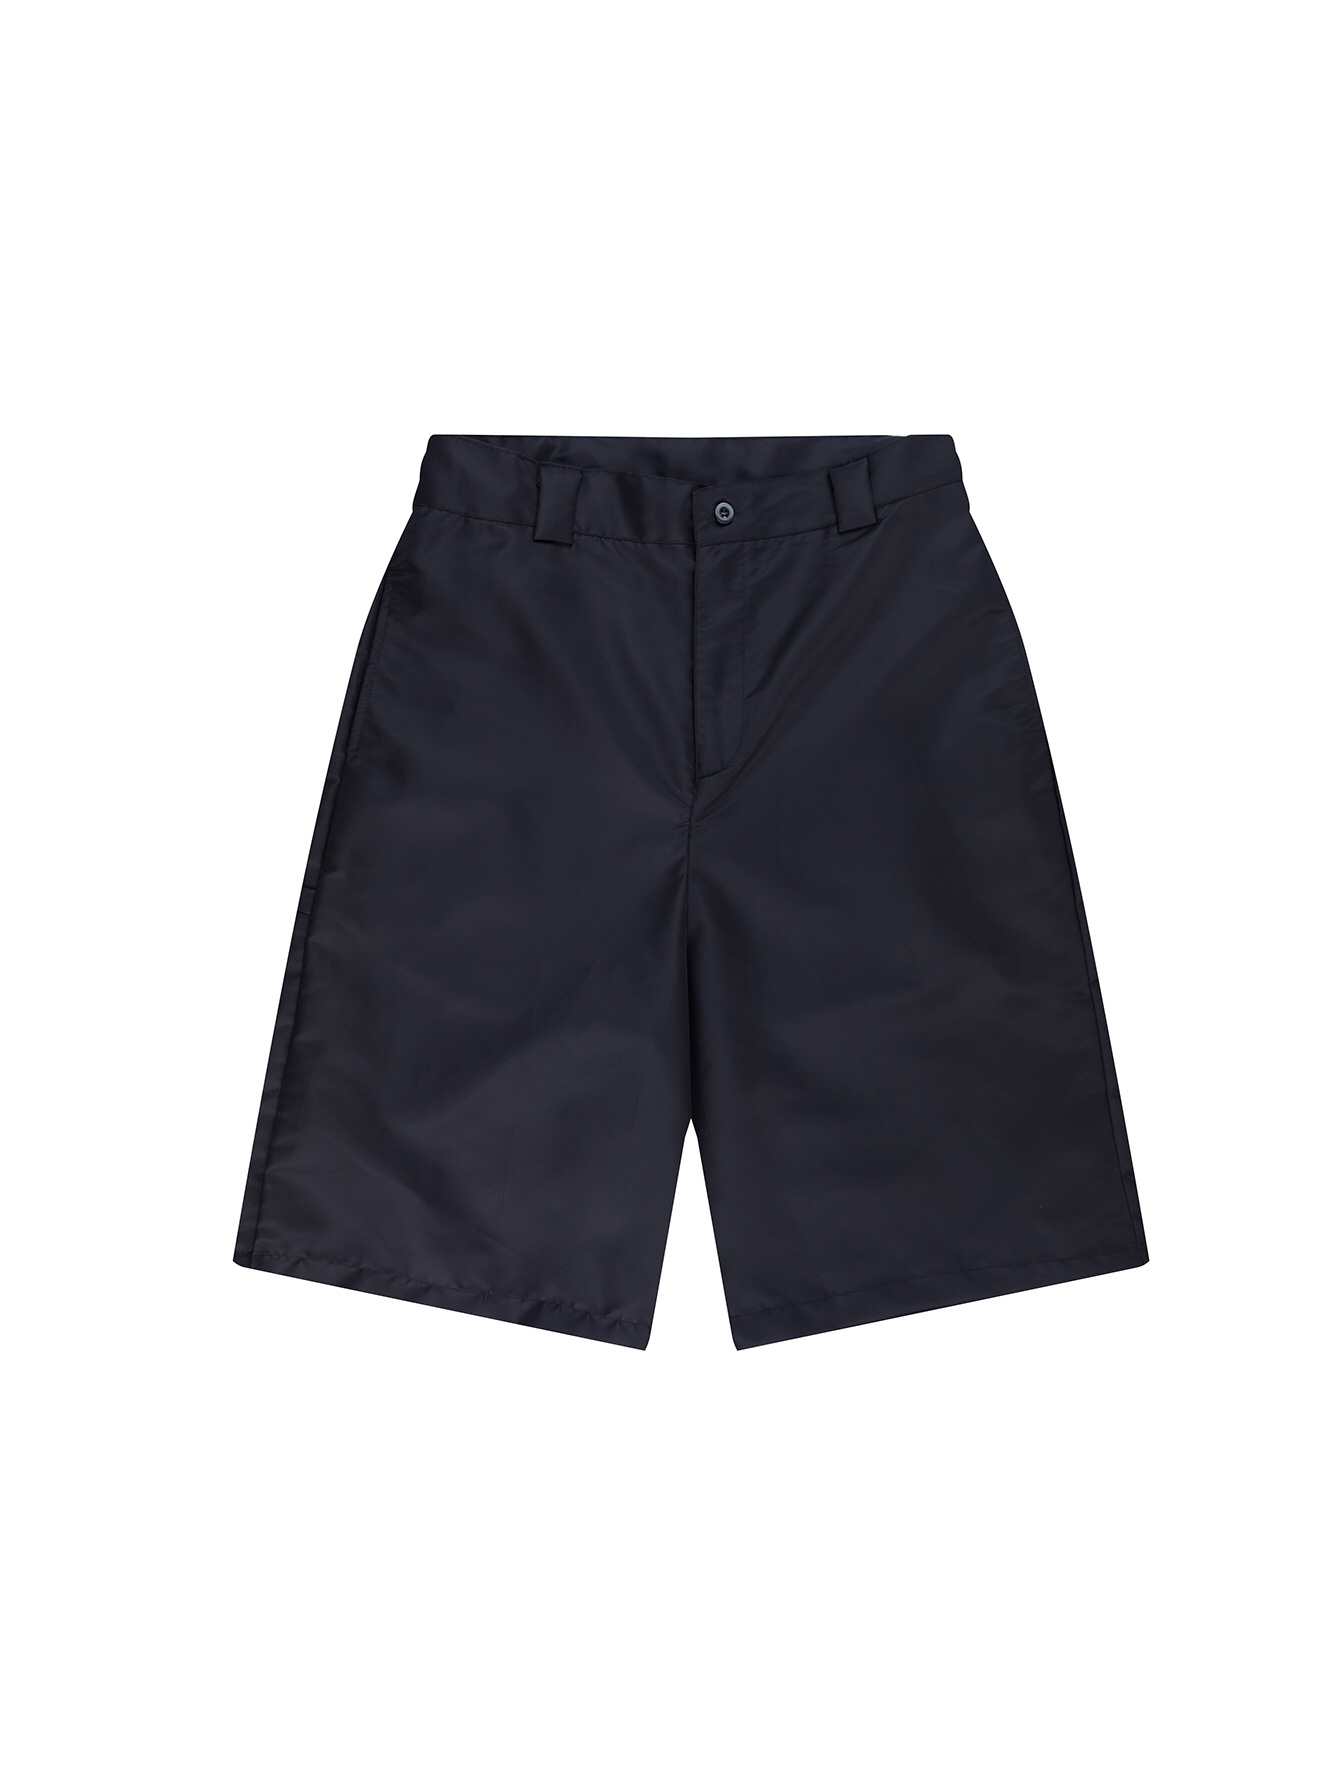 Prada Clothing Shorts Black Nylon Casual